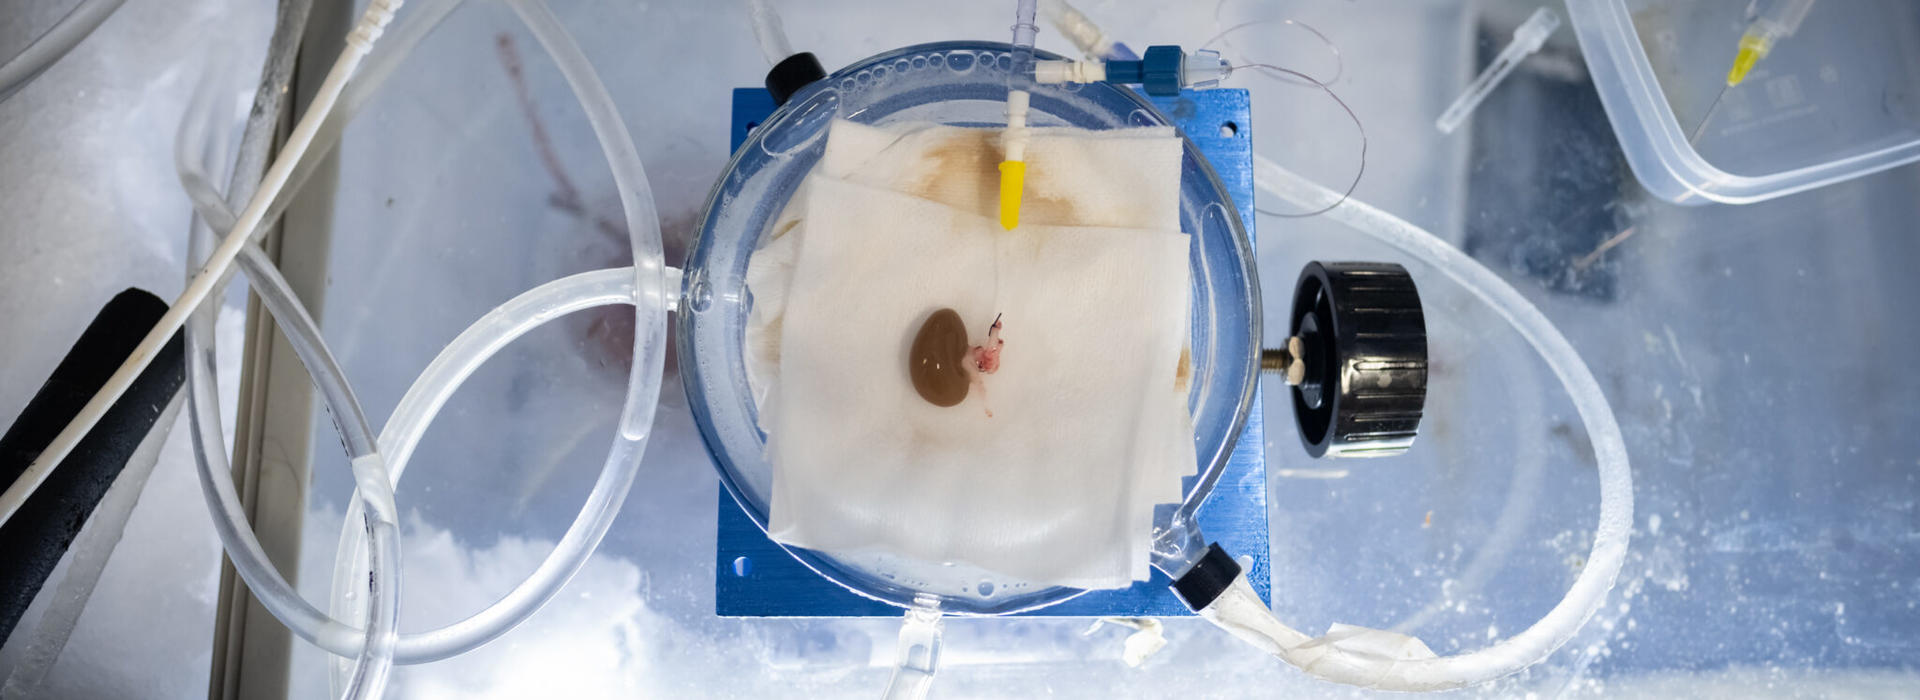 Rat kidney being prepared for transplantation. 